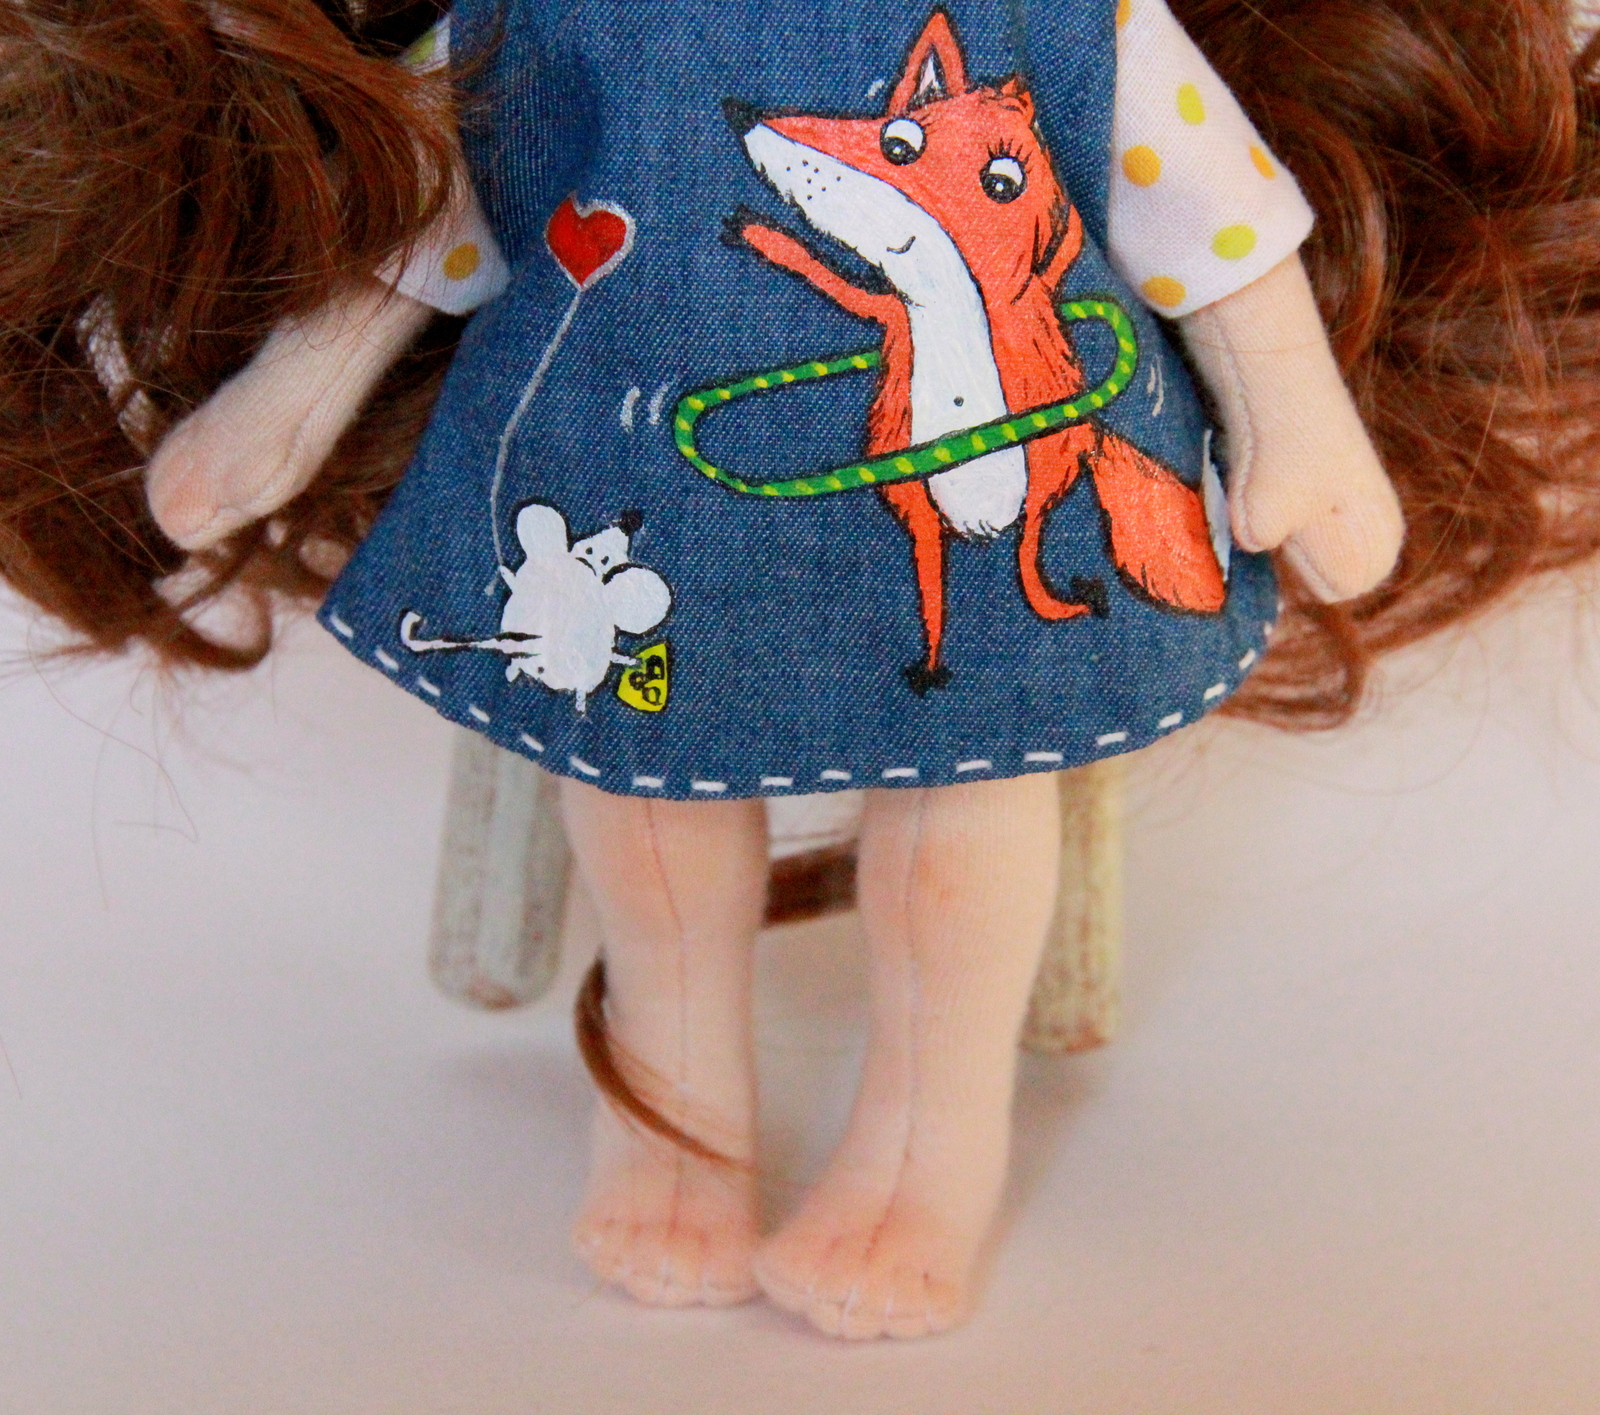 Non-strawberry) - My, Doll, Needlework without process, Needlemen, Textile doll, Longpost